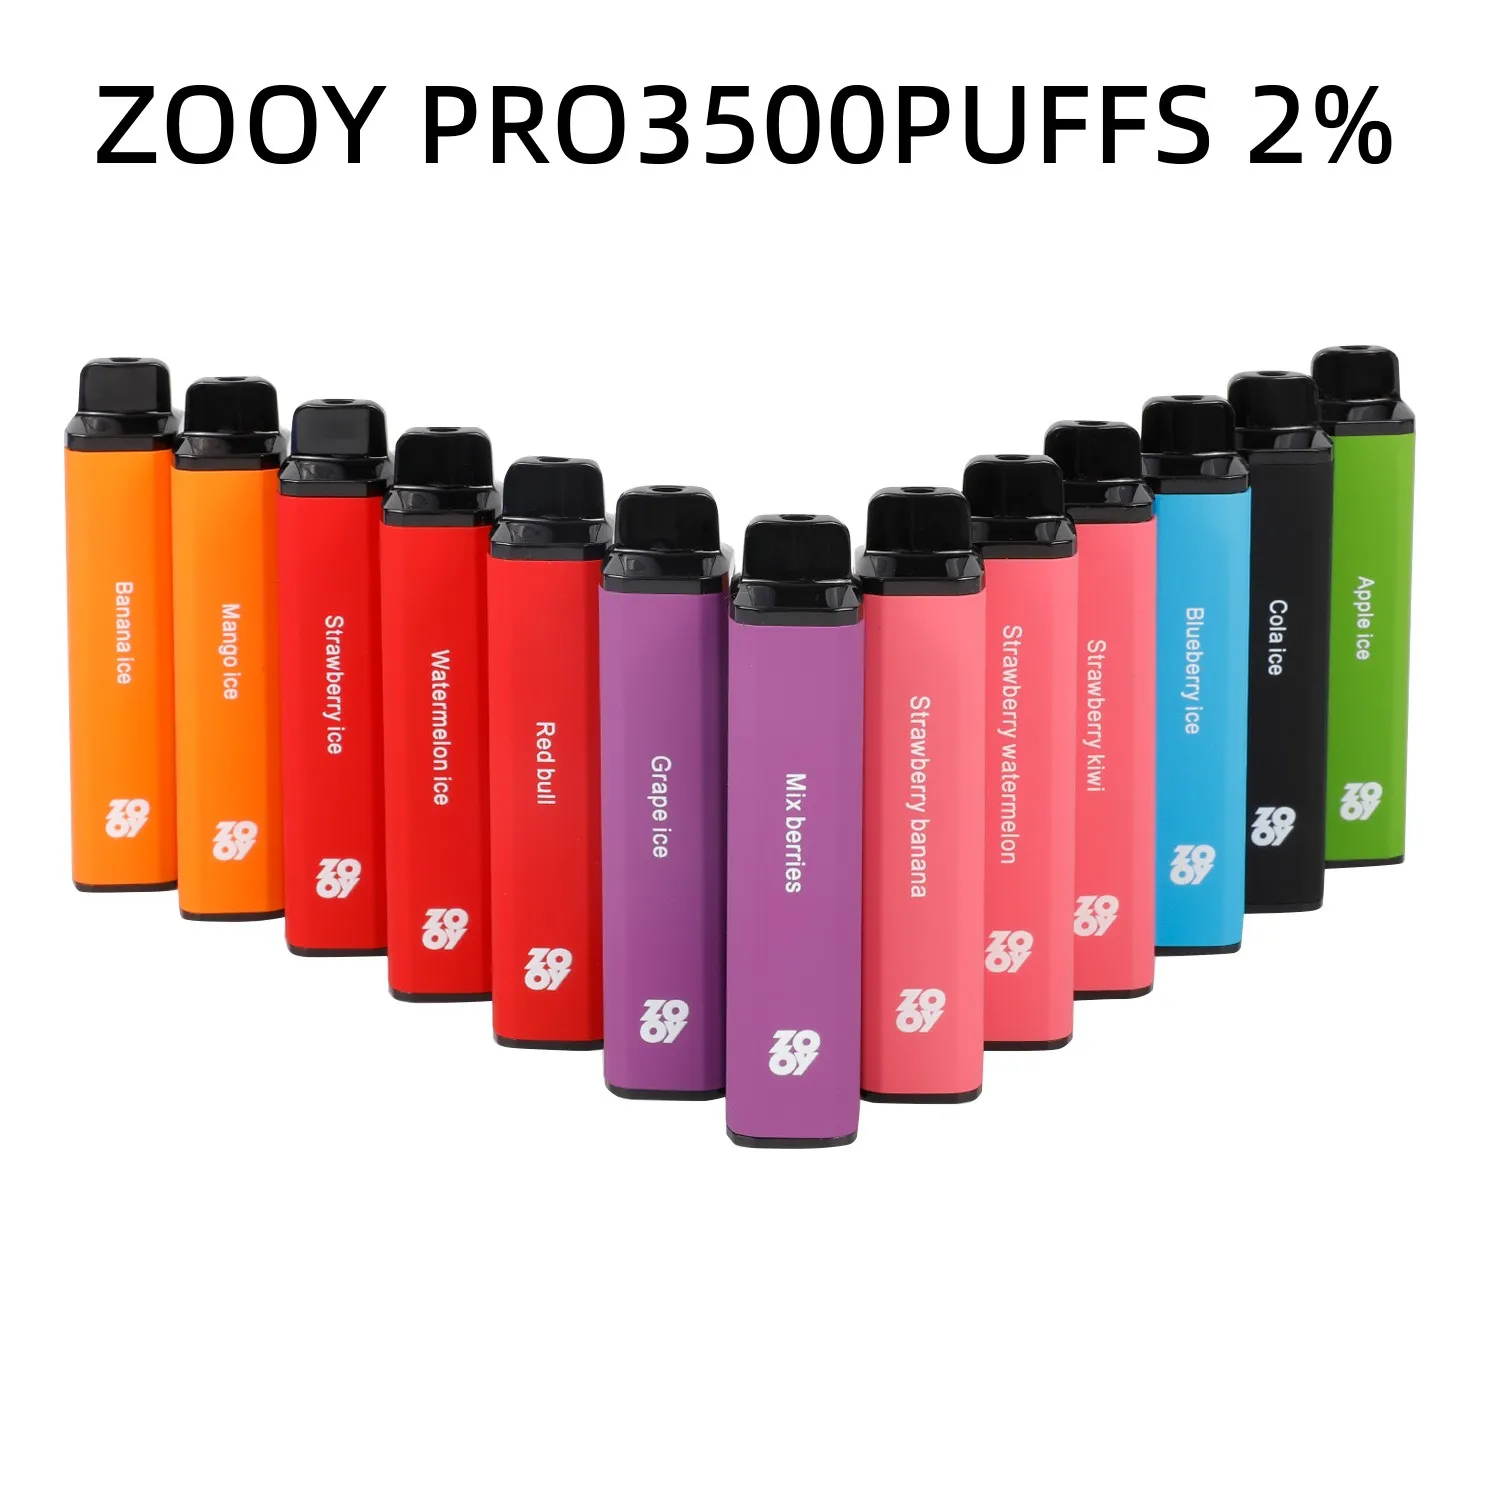 Zooy Legend 3500 Puffs E Cigarett Disponible Vape Pen Mesh Coil 2% Puff 3500 650MAH Vaporizer Stick Vapor Kit 10 ML Pre Filled Patron Device